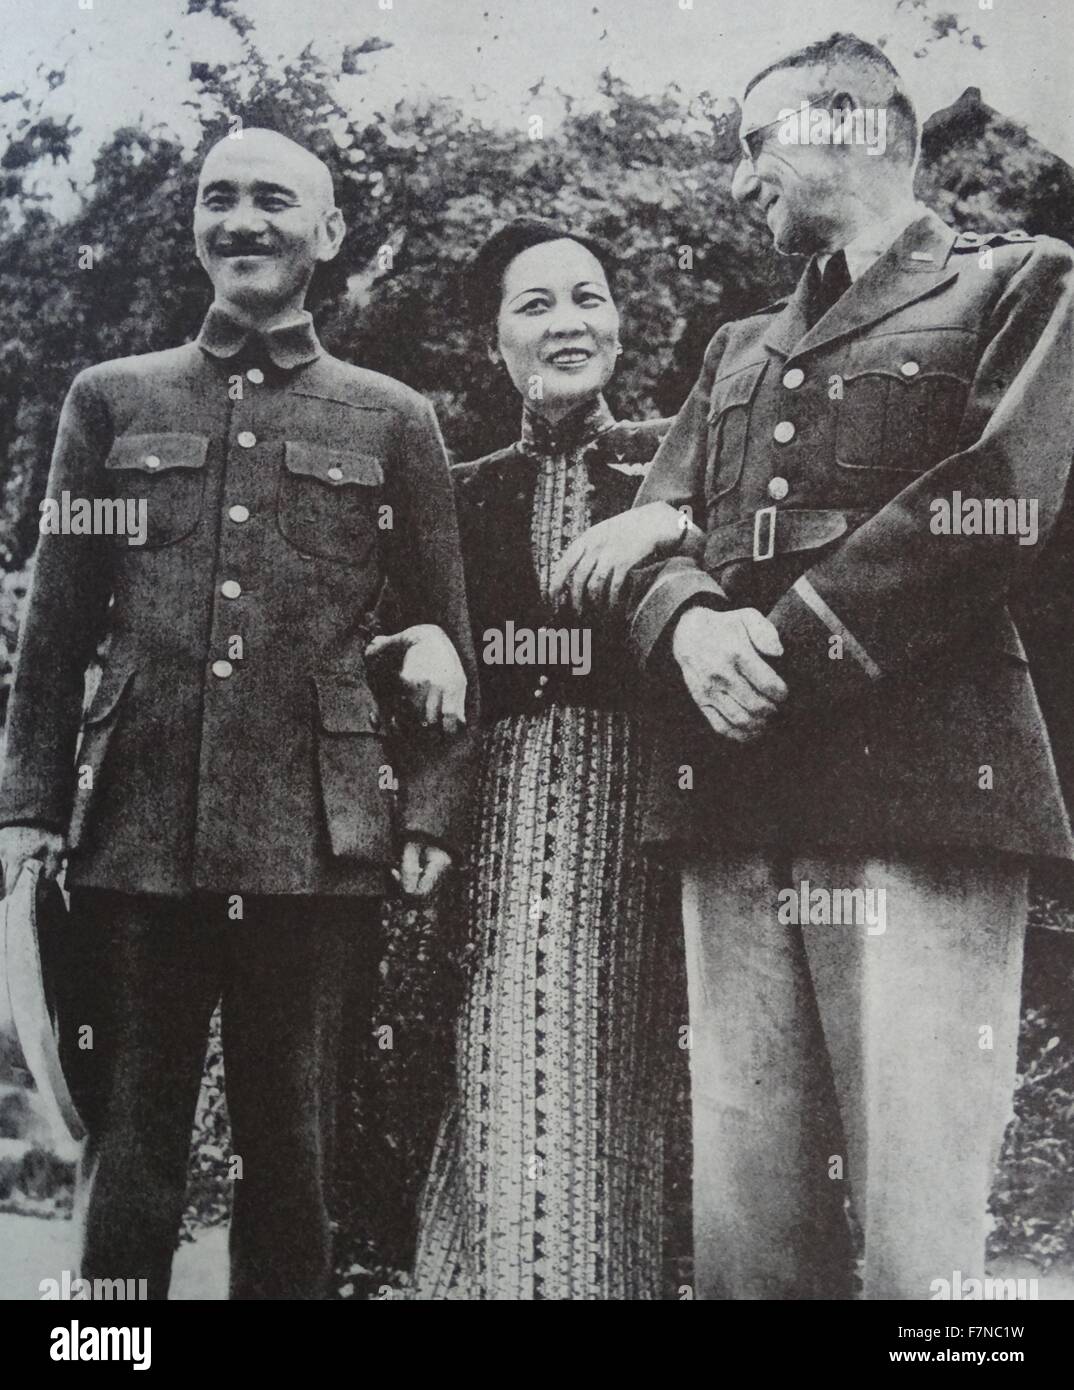 1927-Wedding Picture-China's Chiang Kai-shek & Soong Mei-ling-China Leader-PHOTO